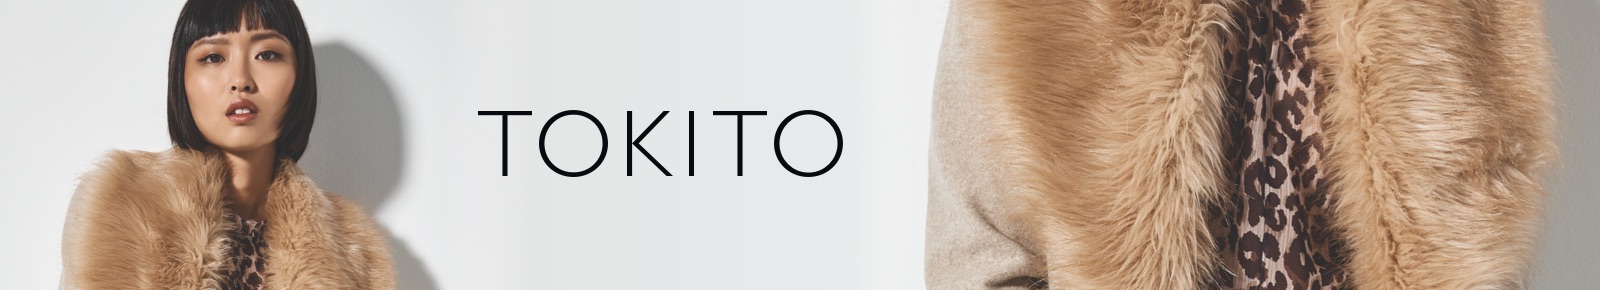 tokito clothing myer